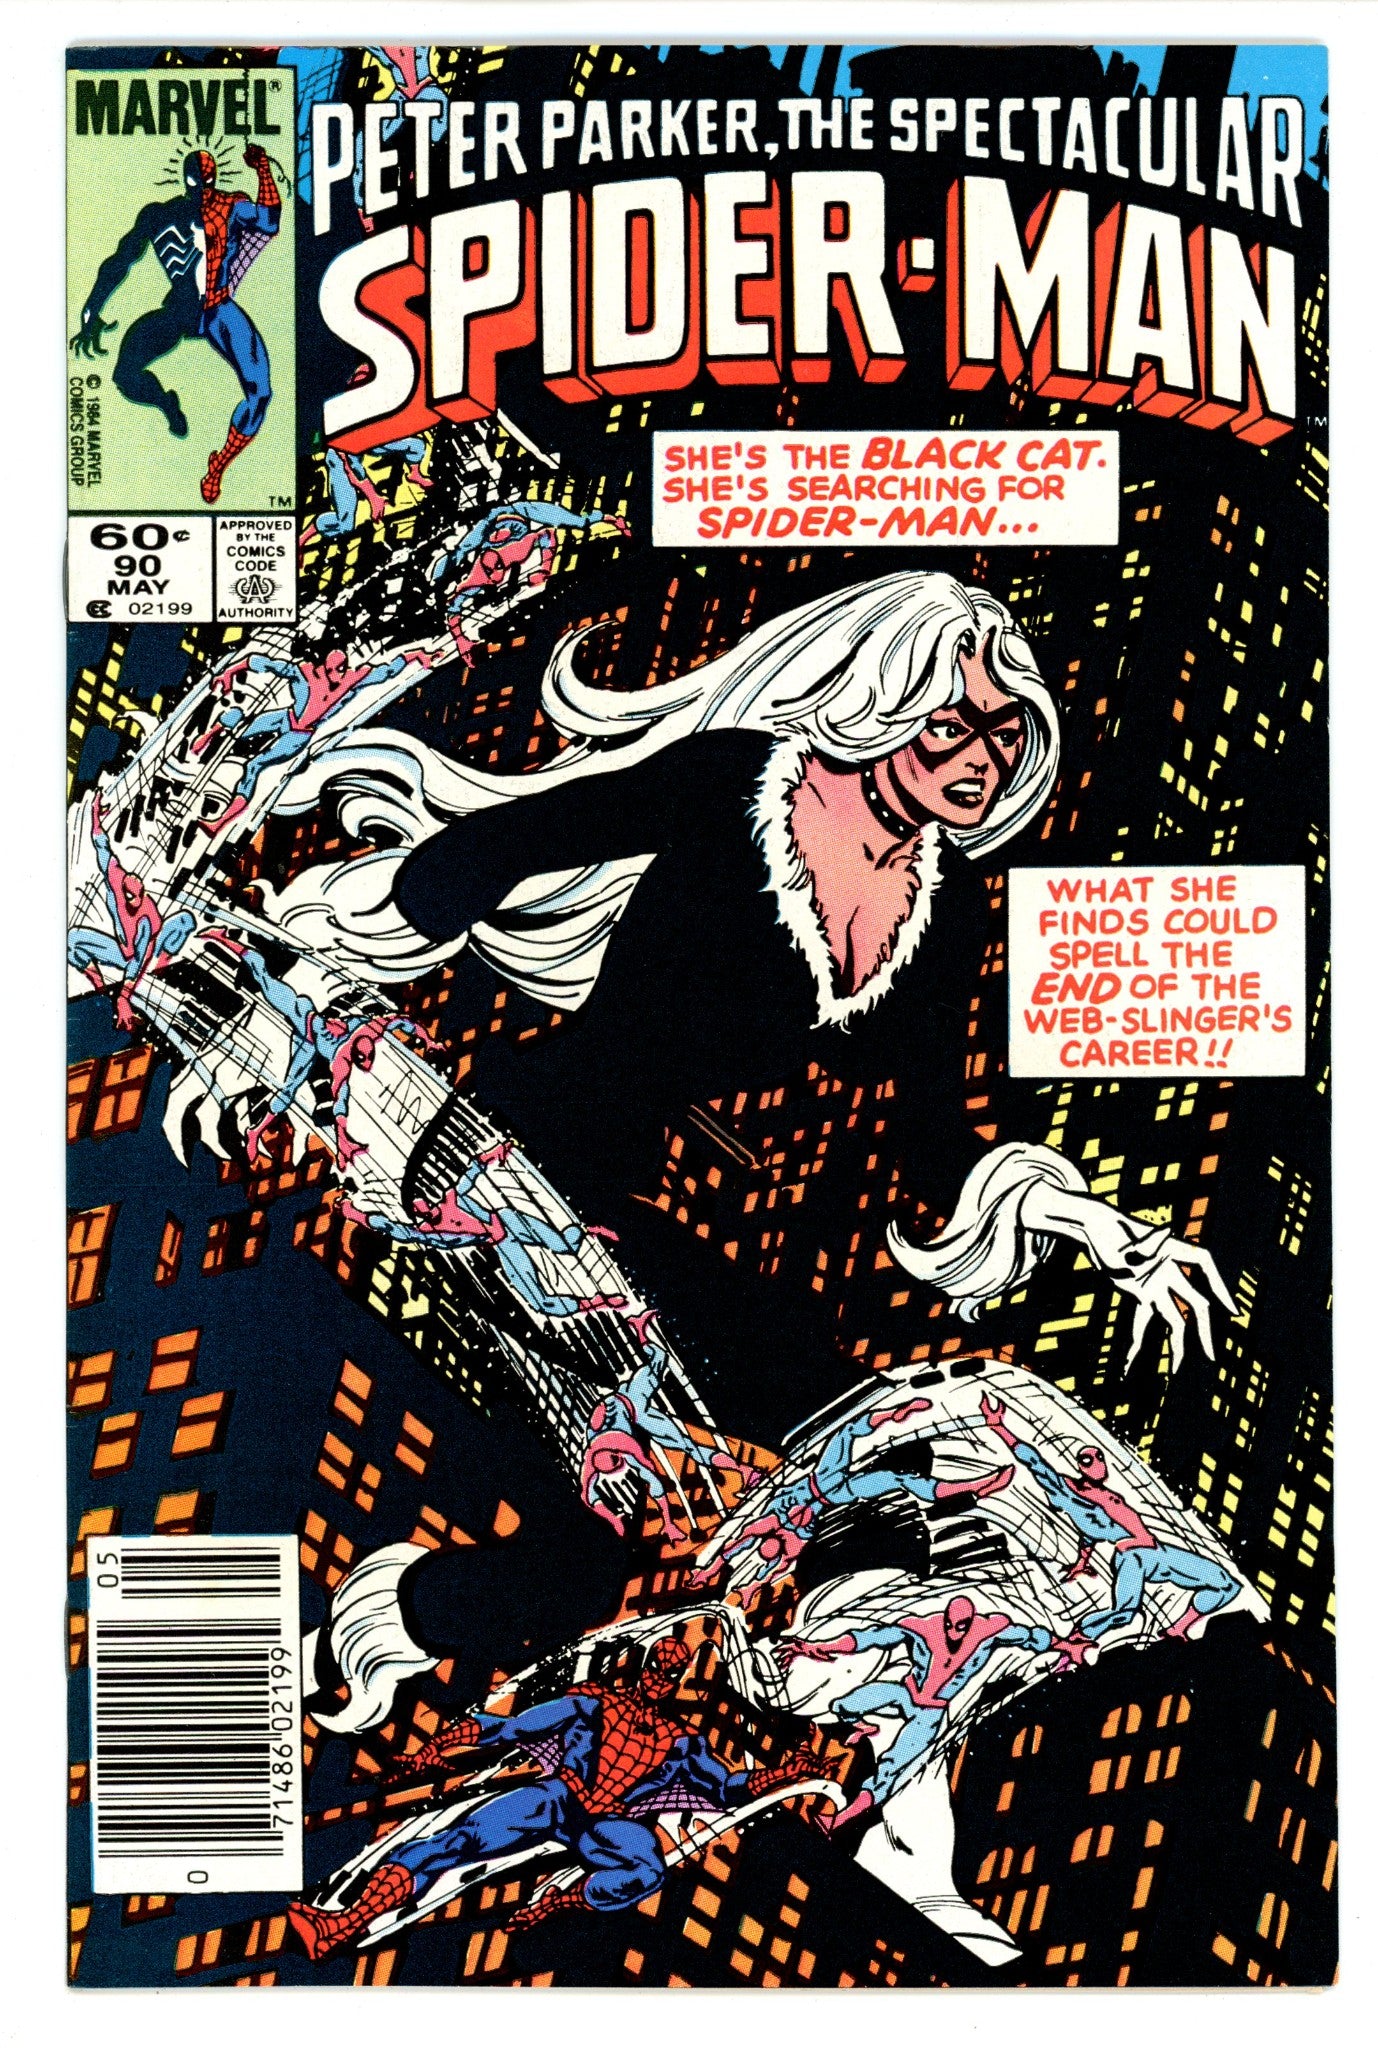 The Spectacular Spider-Man Vol 1 90 VF+ (8.5) (1984) Newsstand 